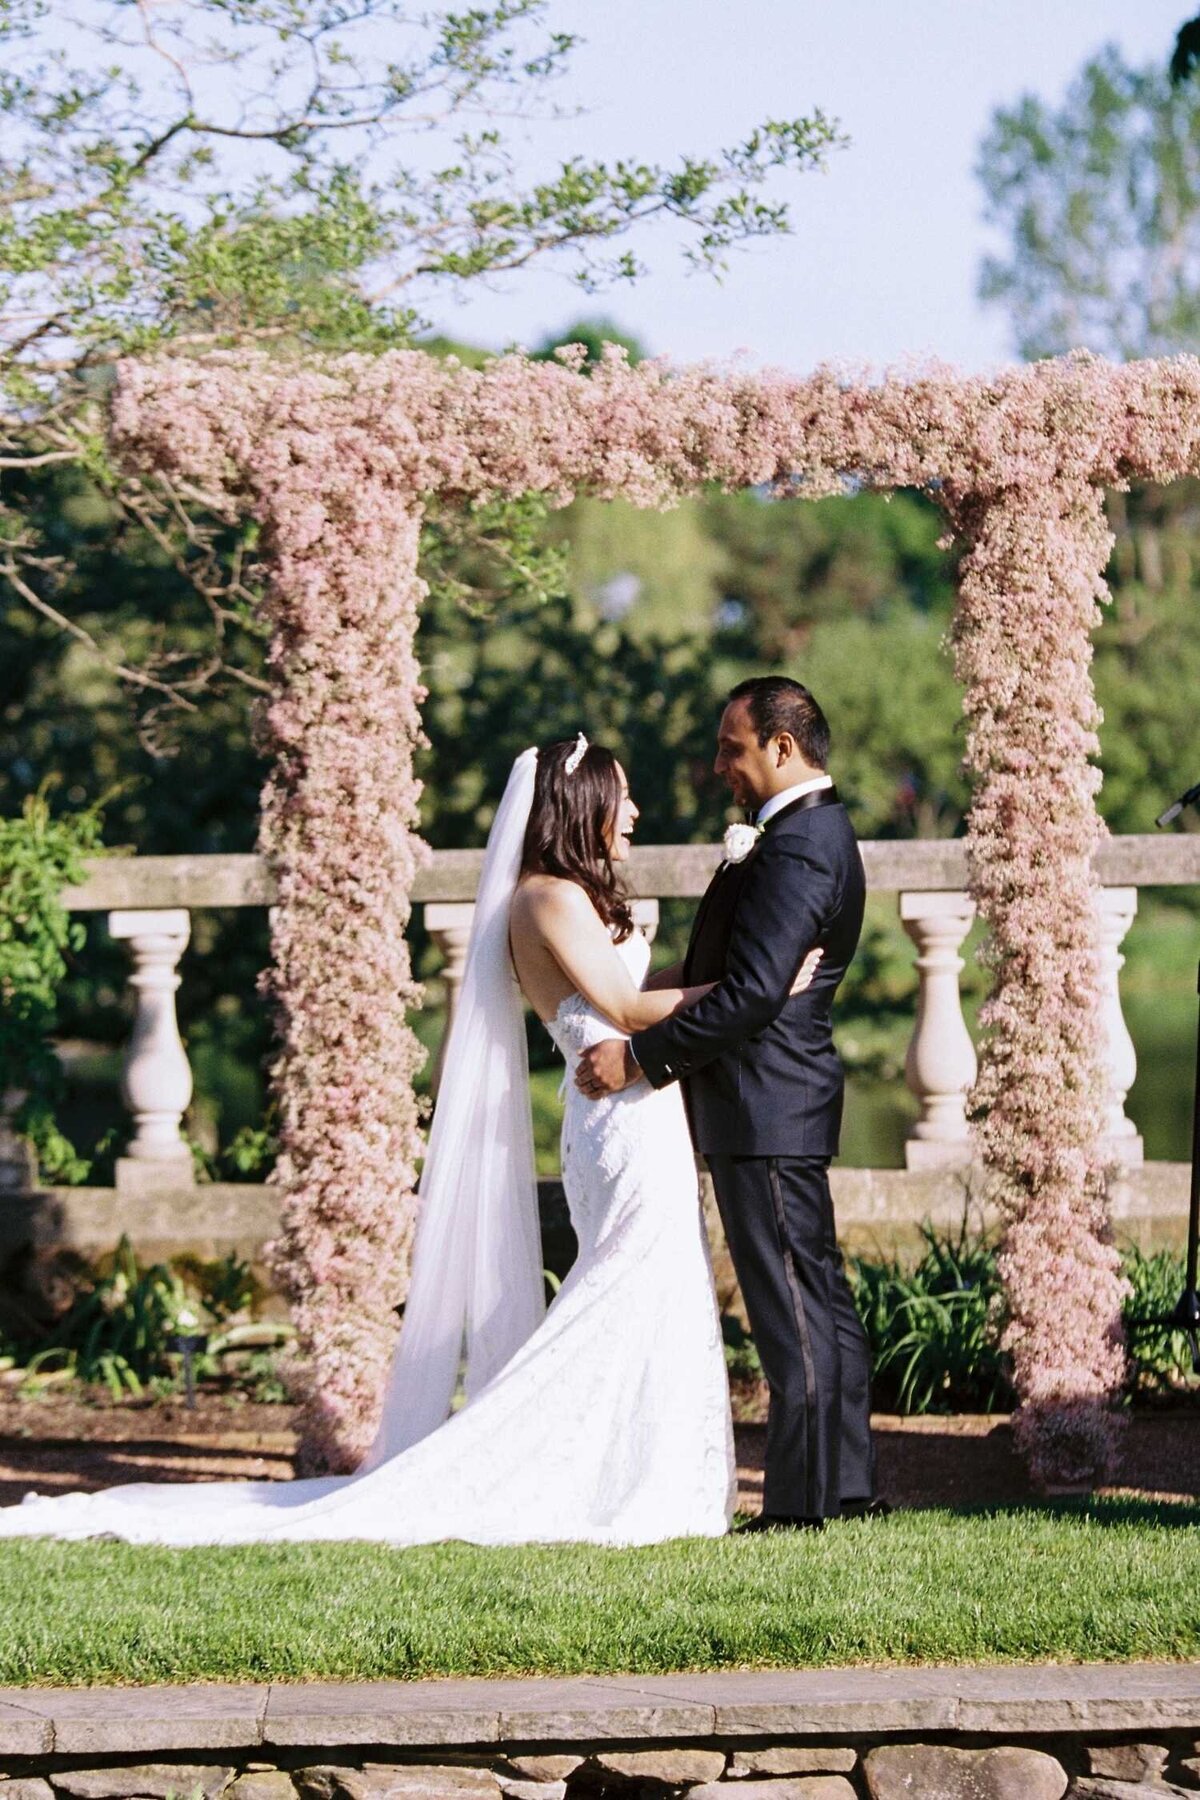 Ceremony Kiss under Pink Floral Ceremony Arch at Luxury Chicago North Shore Garden Wedding Venue